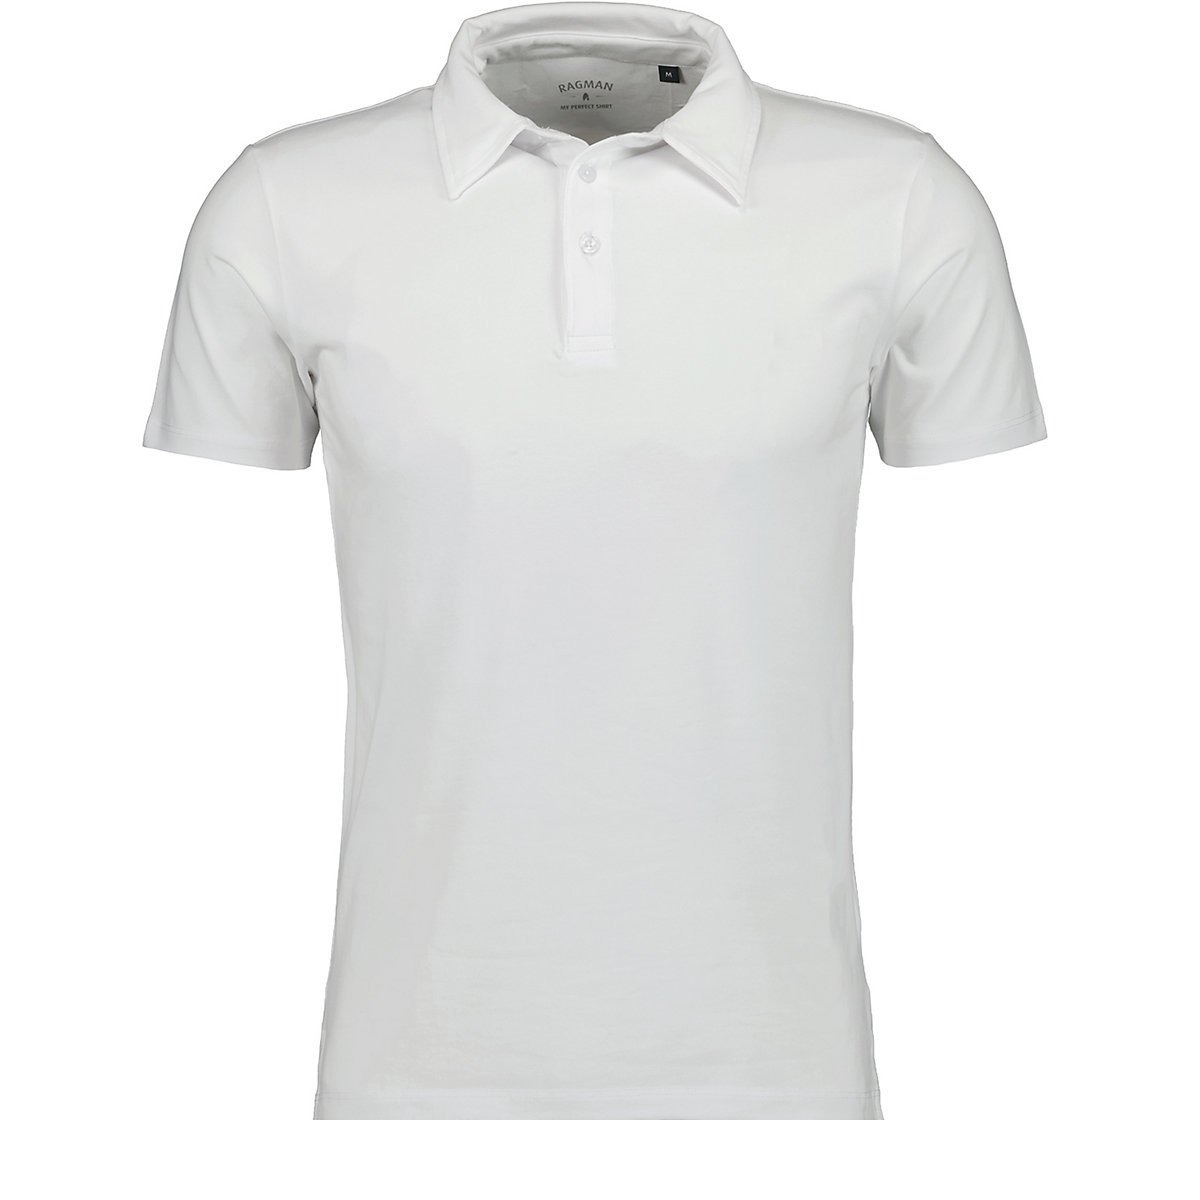 RAGMAN Poloshirt uni body fit Poloshirts weiß